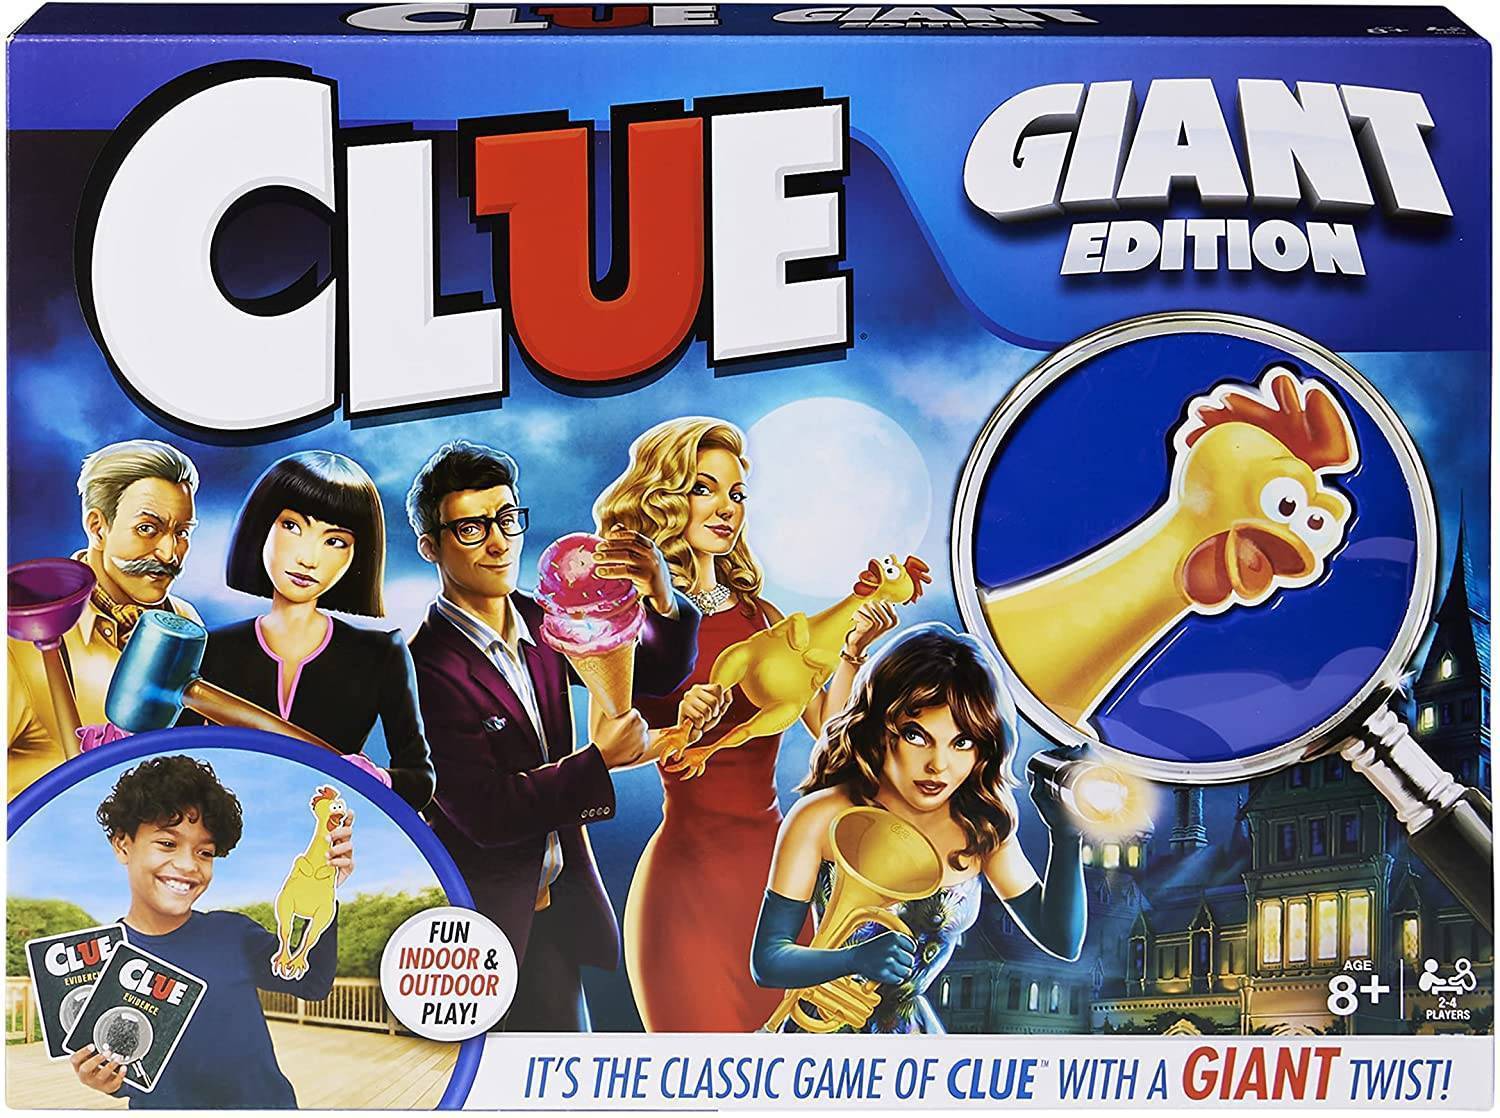 Clue Giant